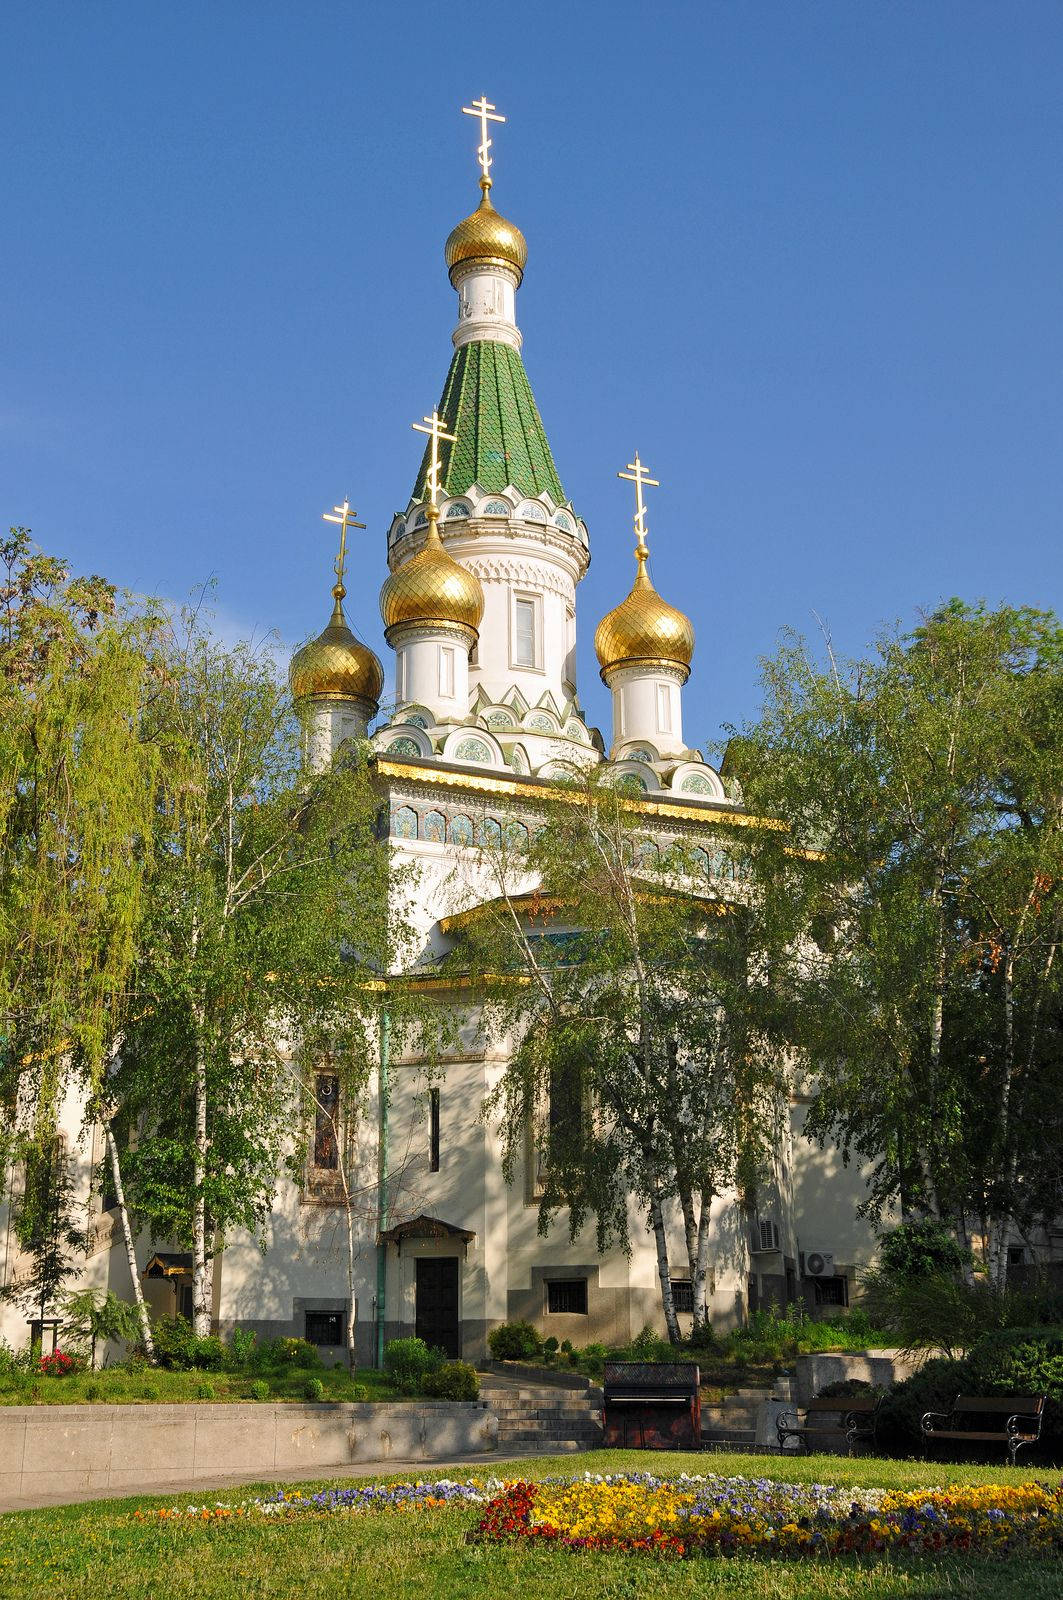 Bulgaria Church Of St. Nicholas Miracle-maker